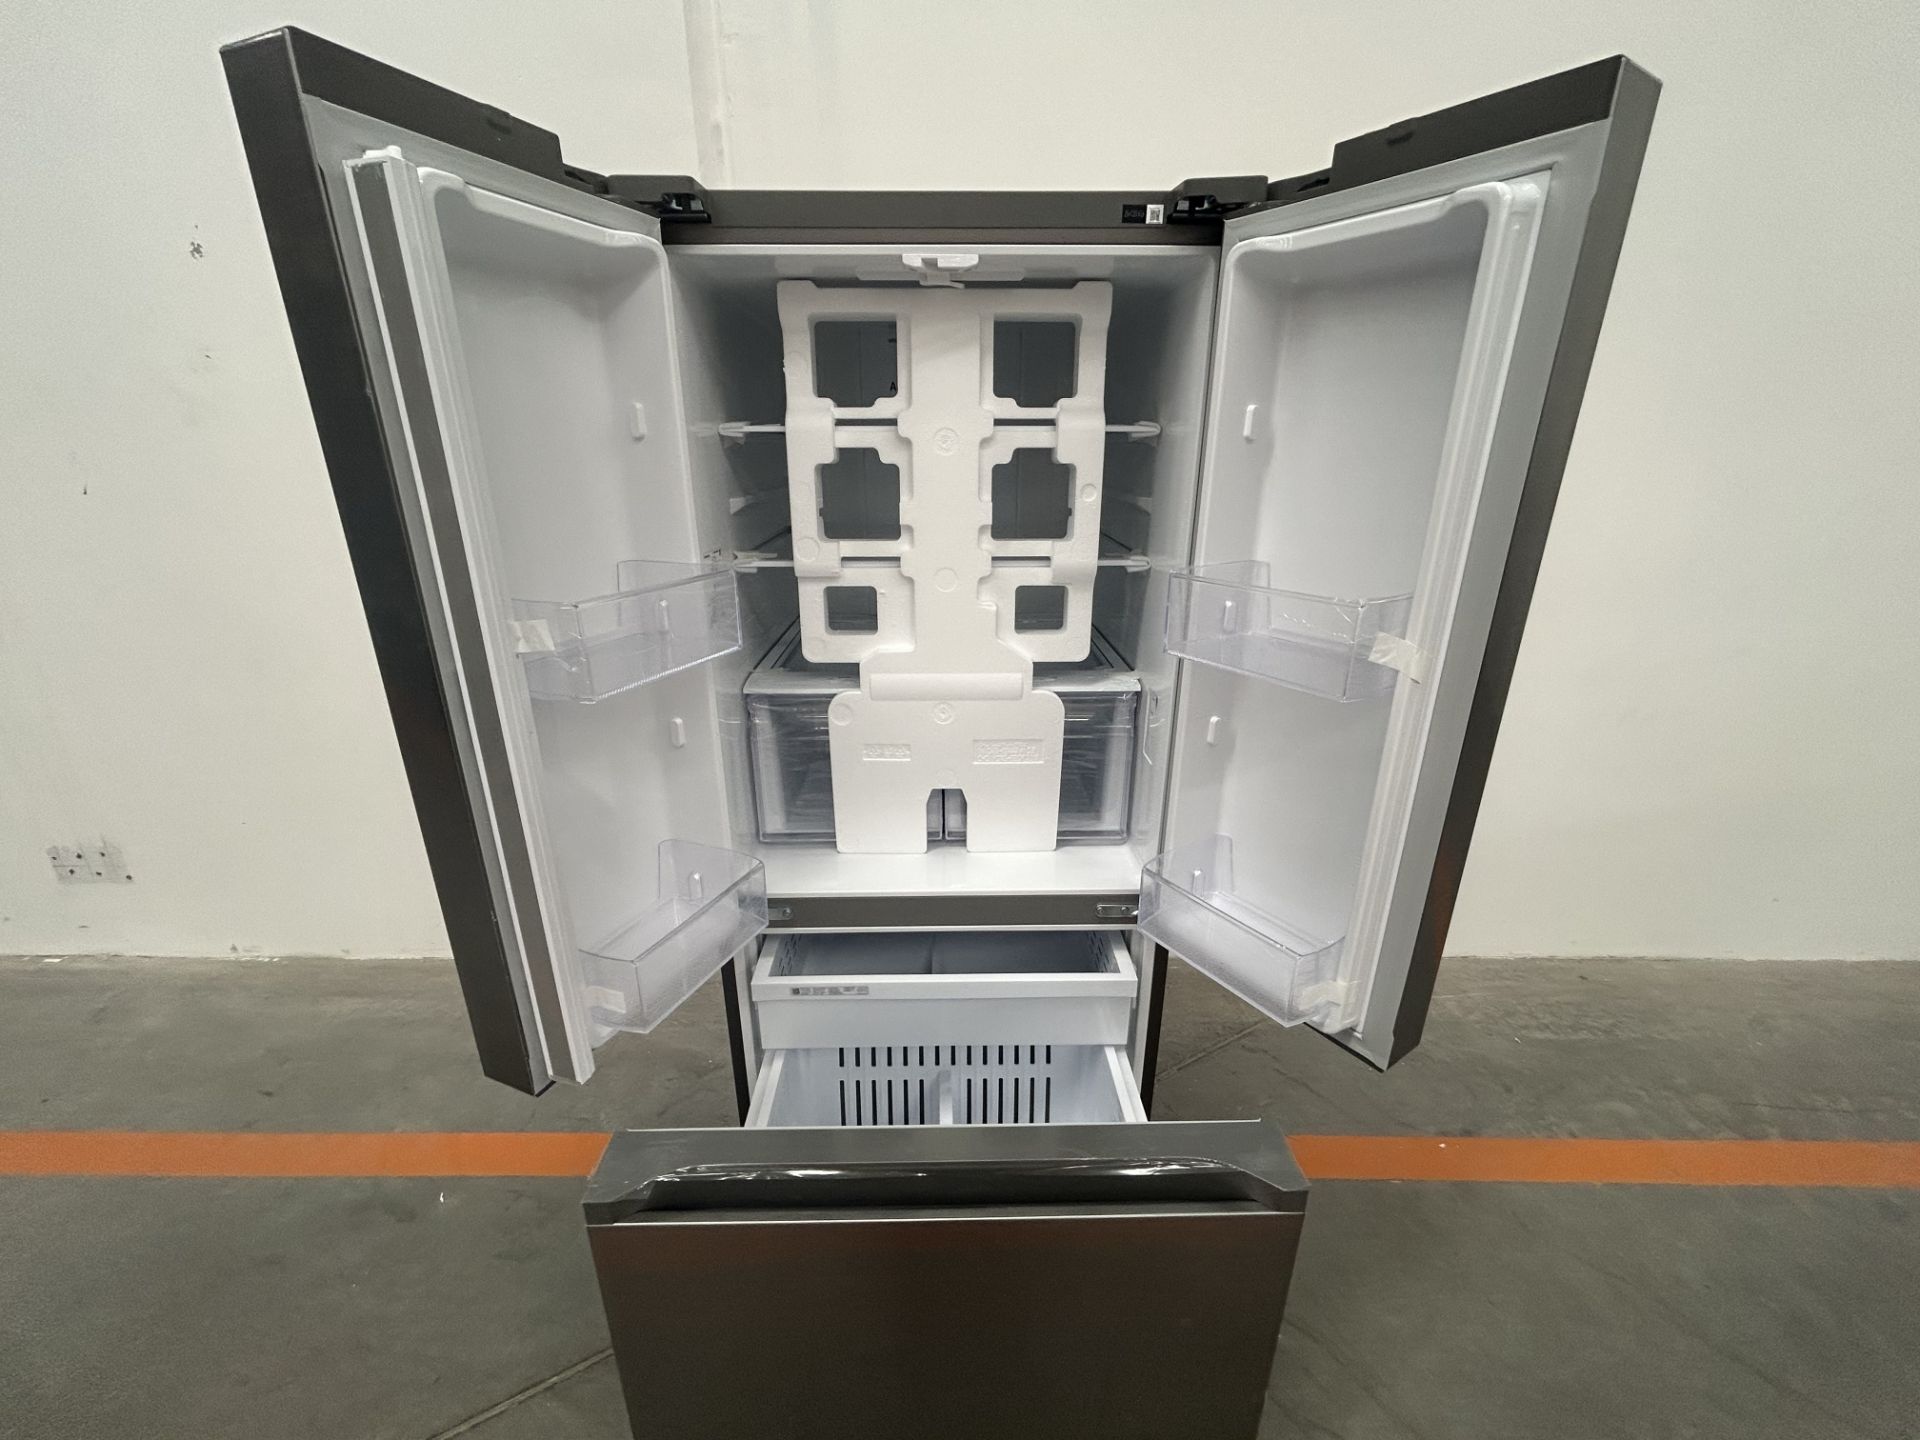 (NUEVO) Refrigerador Marca SAMSUNG, Modelo RF22A4010S9, Serie 00109H, Color GRIS - Image 4 of 4